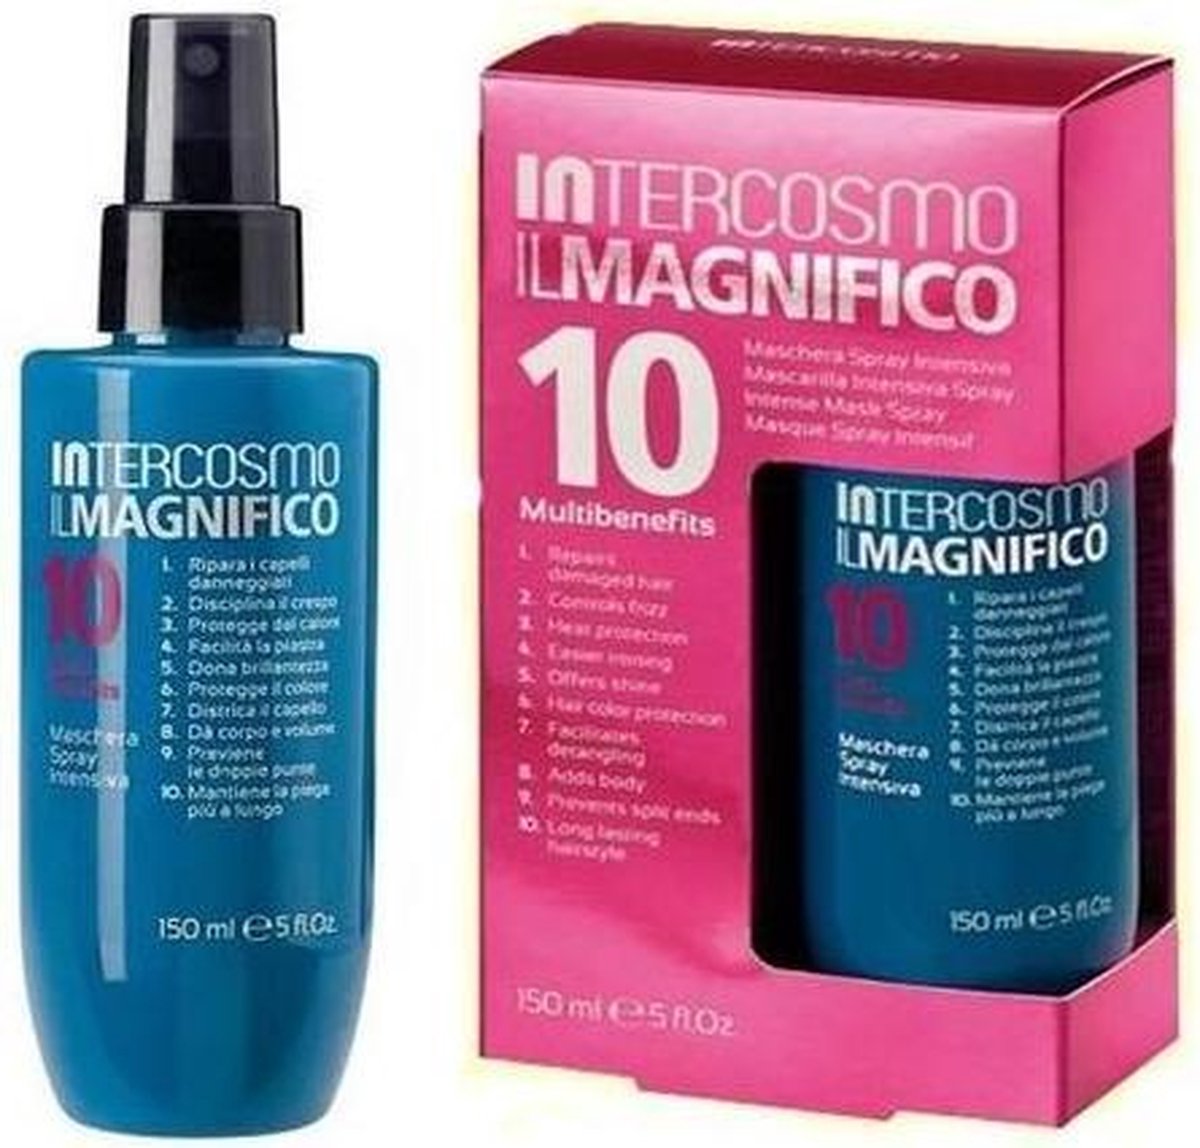 Intercosmo - Intercosmo IL Magnifico 10 Multibenefits Maschera Spray Intensive - Intensive Hair Mask Spray - 150ml